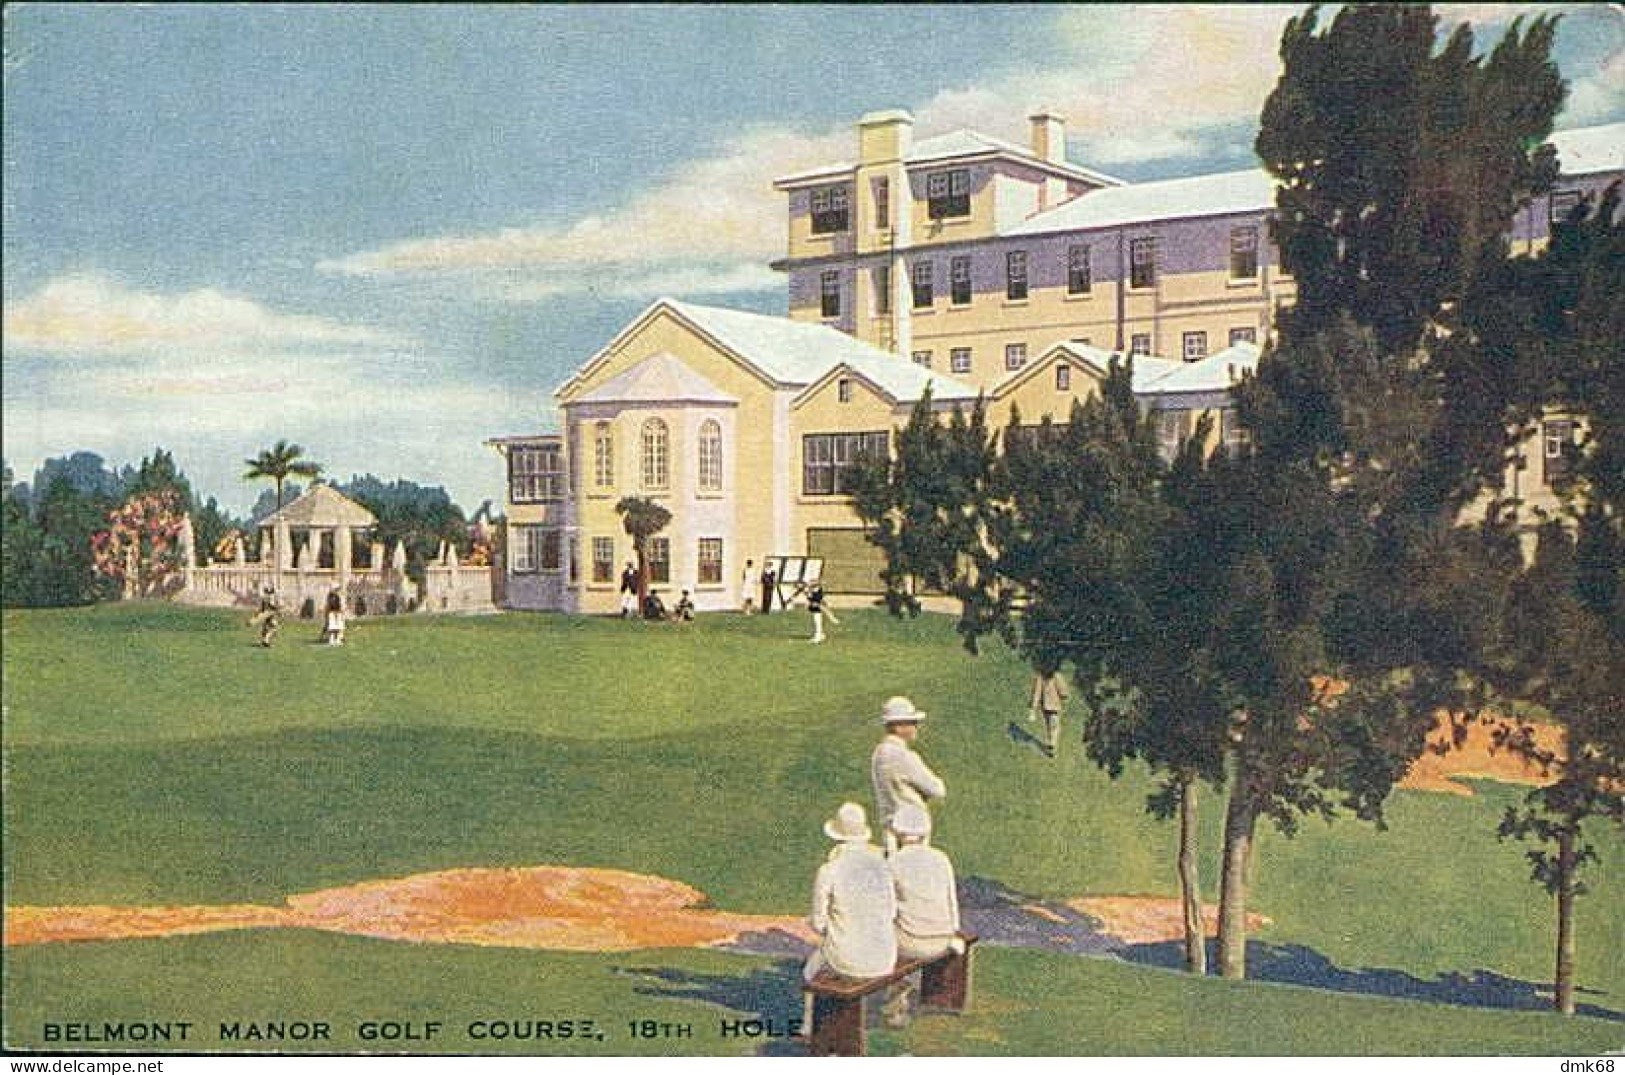 BERMUDA - BELMONT MANOR GOLF COURSE - 18th HOLE - PUB. VULCAN PRESS THE R.A.P. CO. - 1930s (17787) - Bermuda